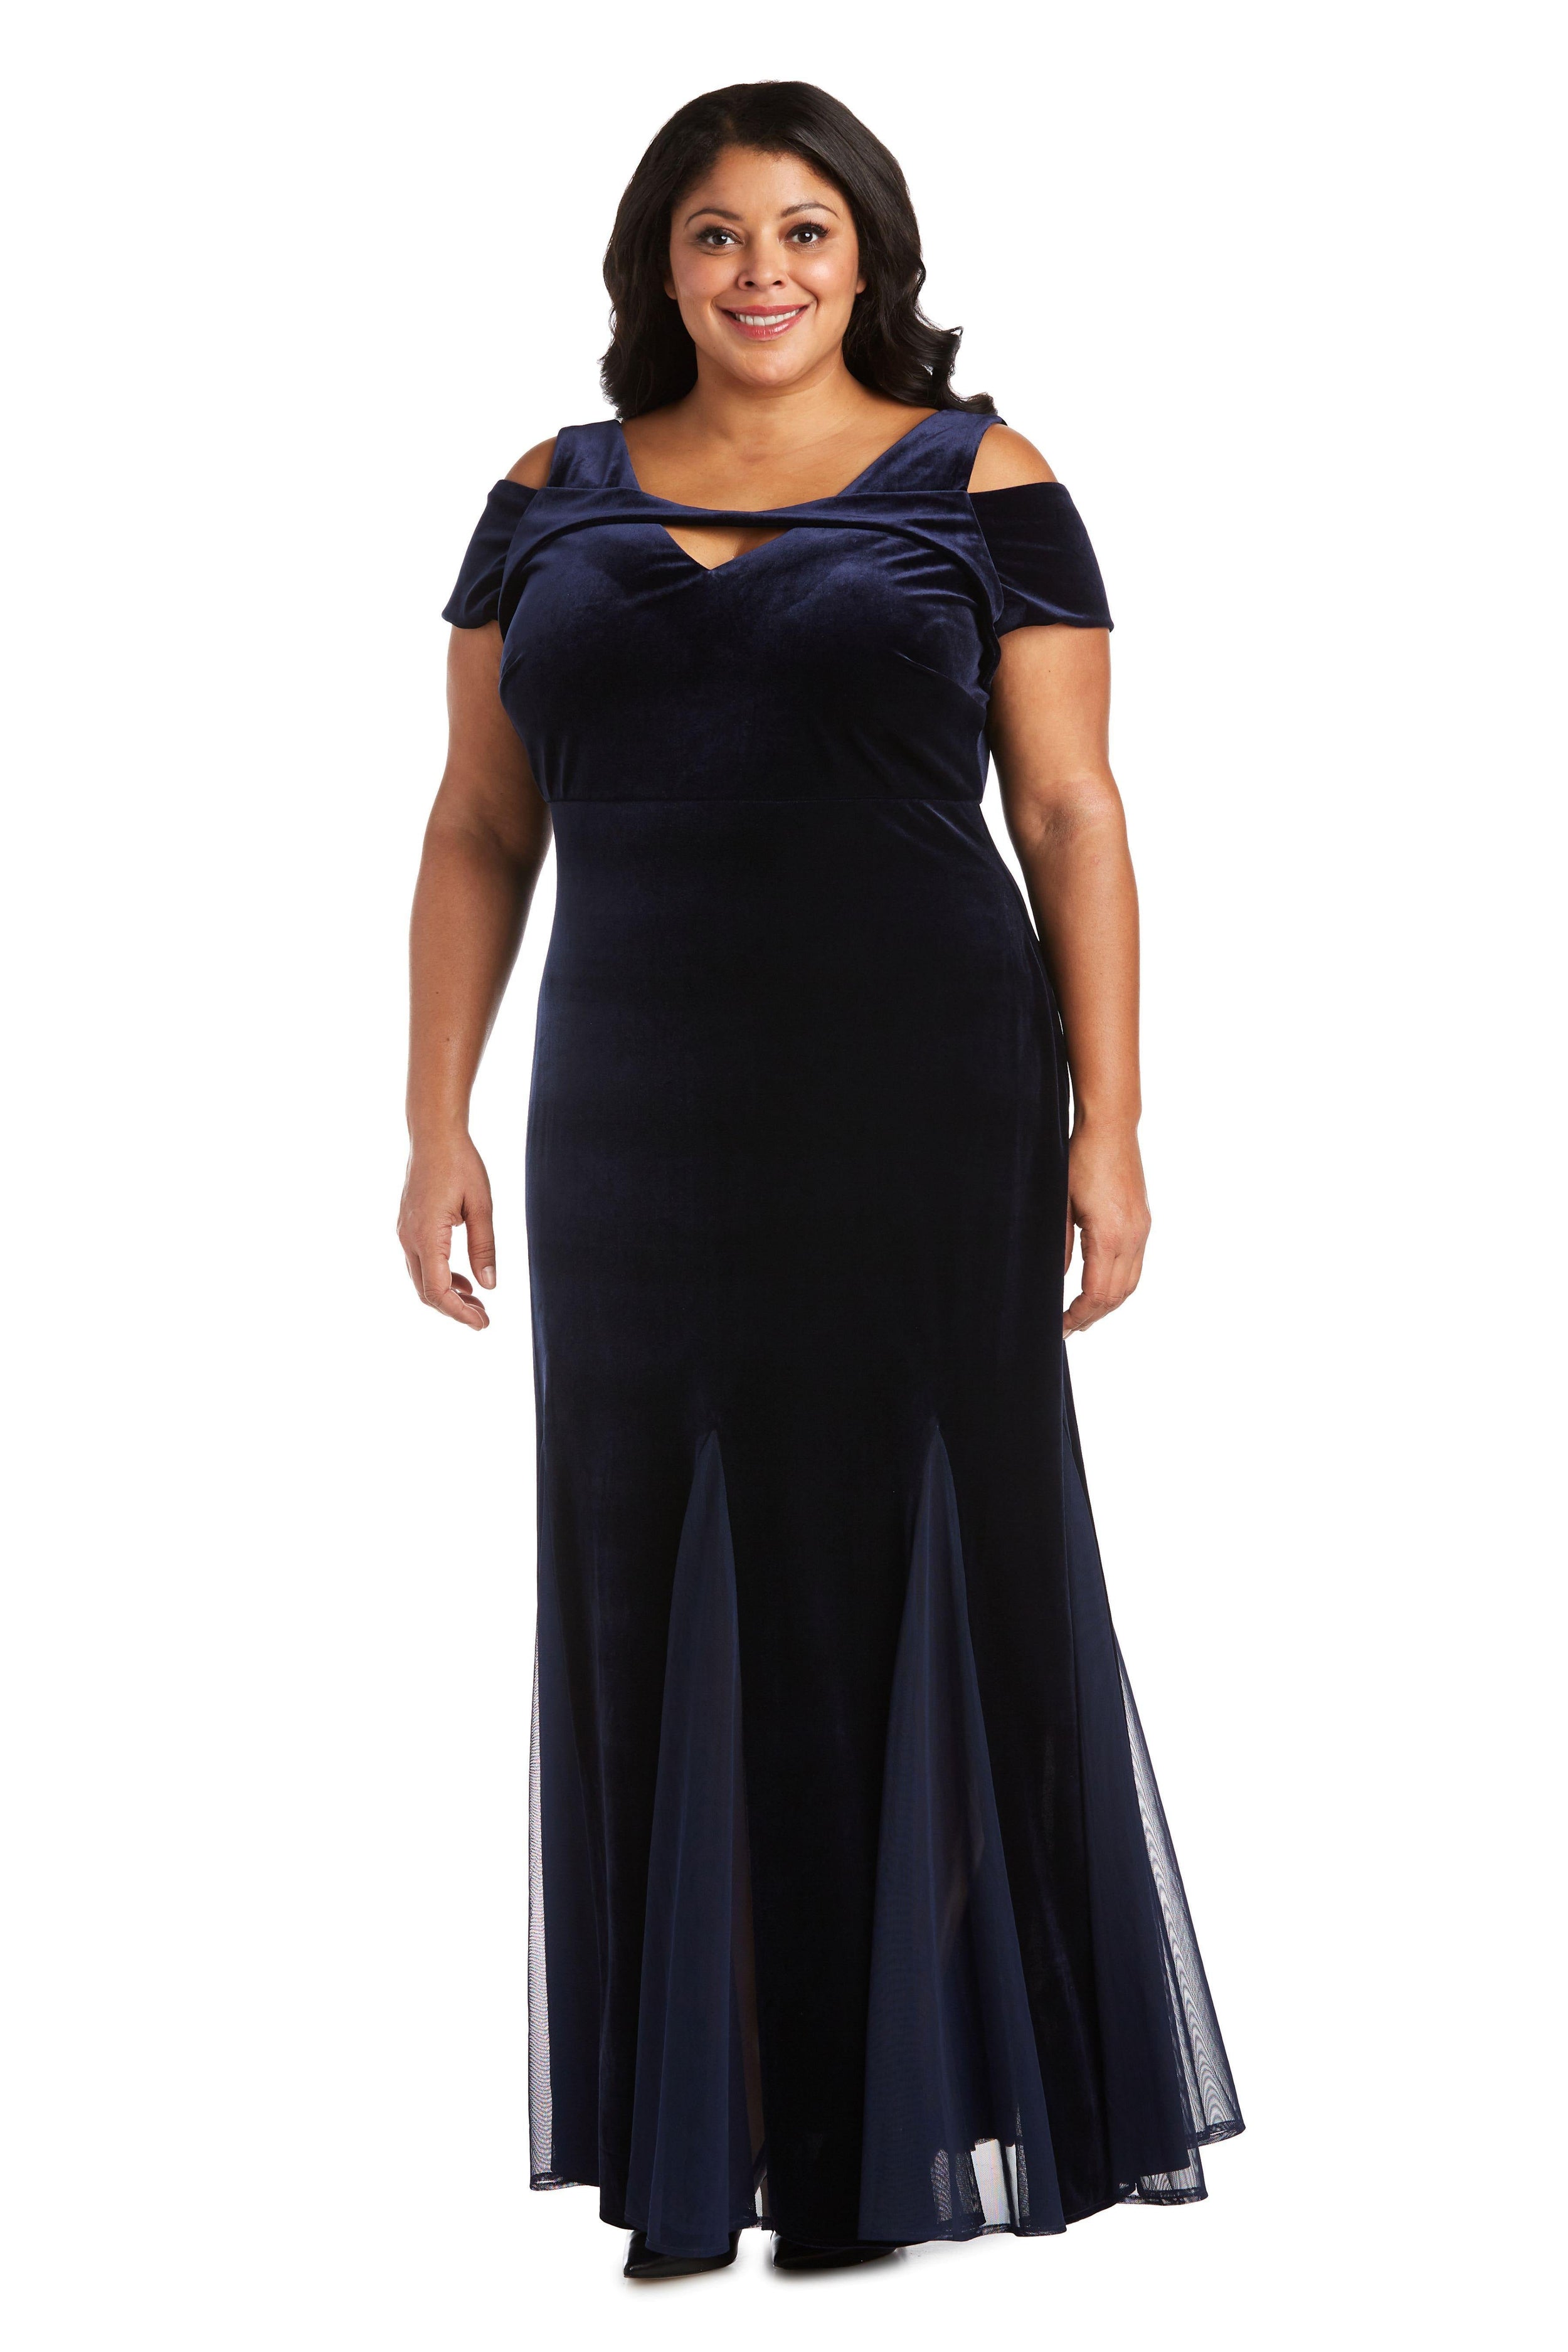 Nightway Long Plus Size Velvet Dress 21999W - The Dress Outlet